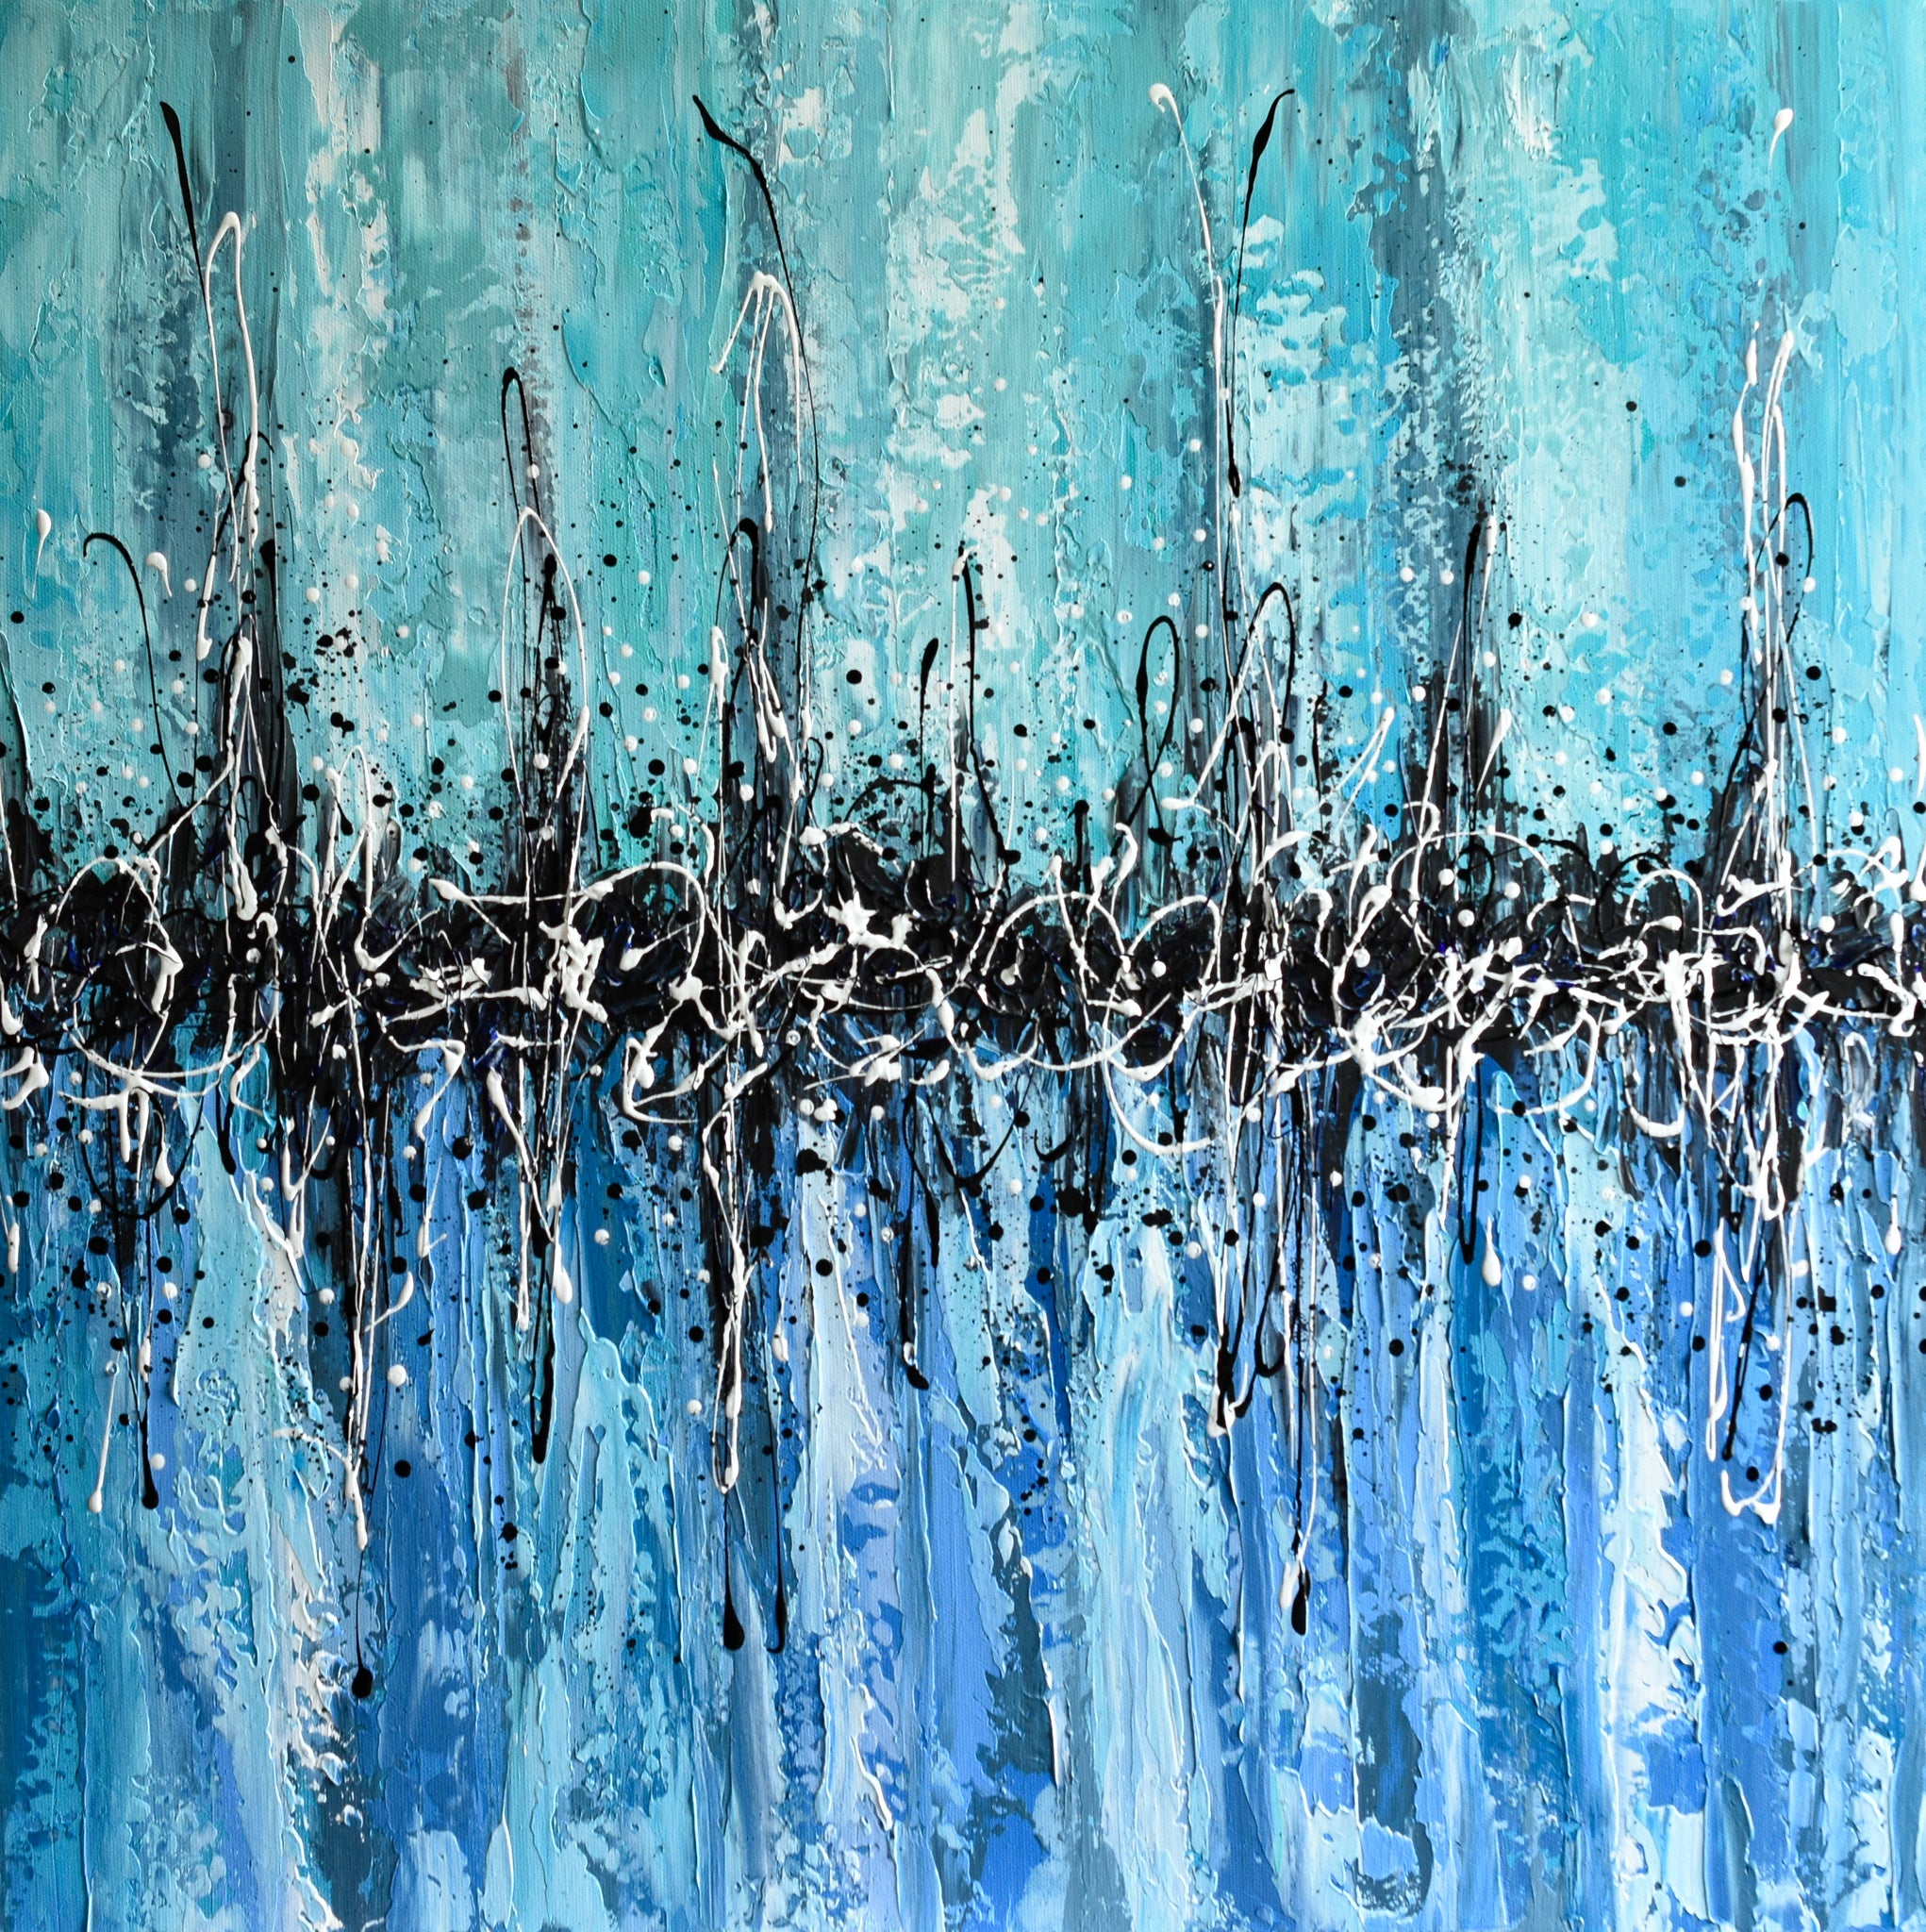 Aqua blue abstract painting, palette knife art, textured wall art canvas